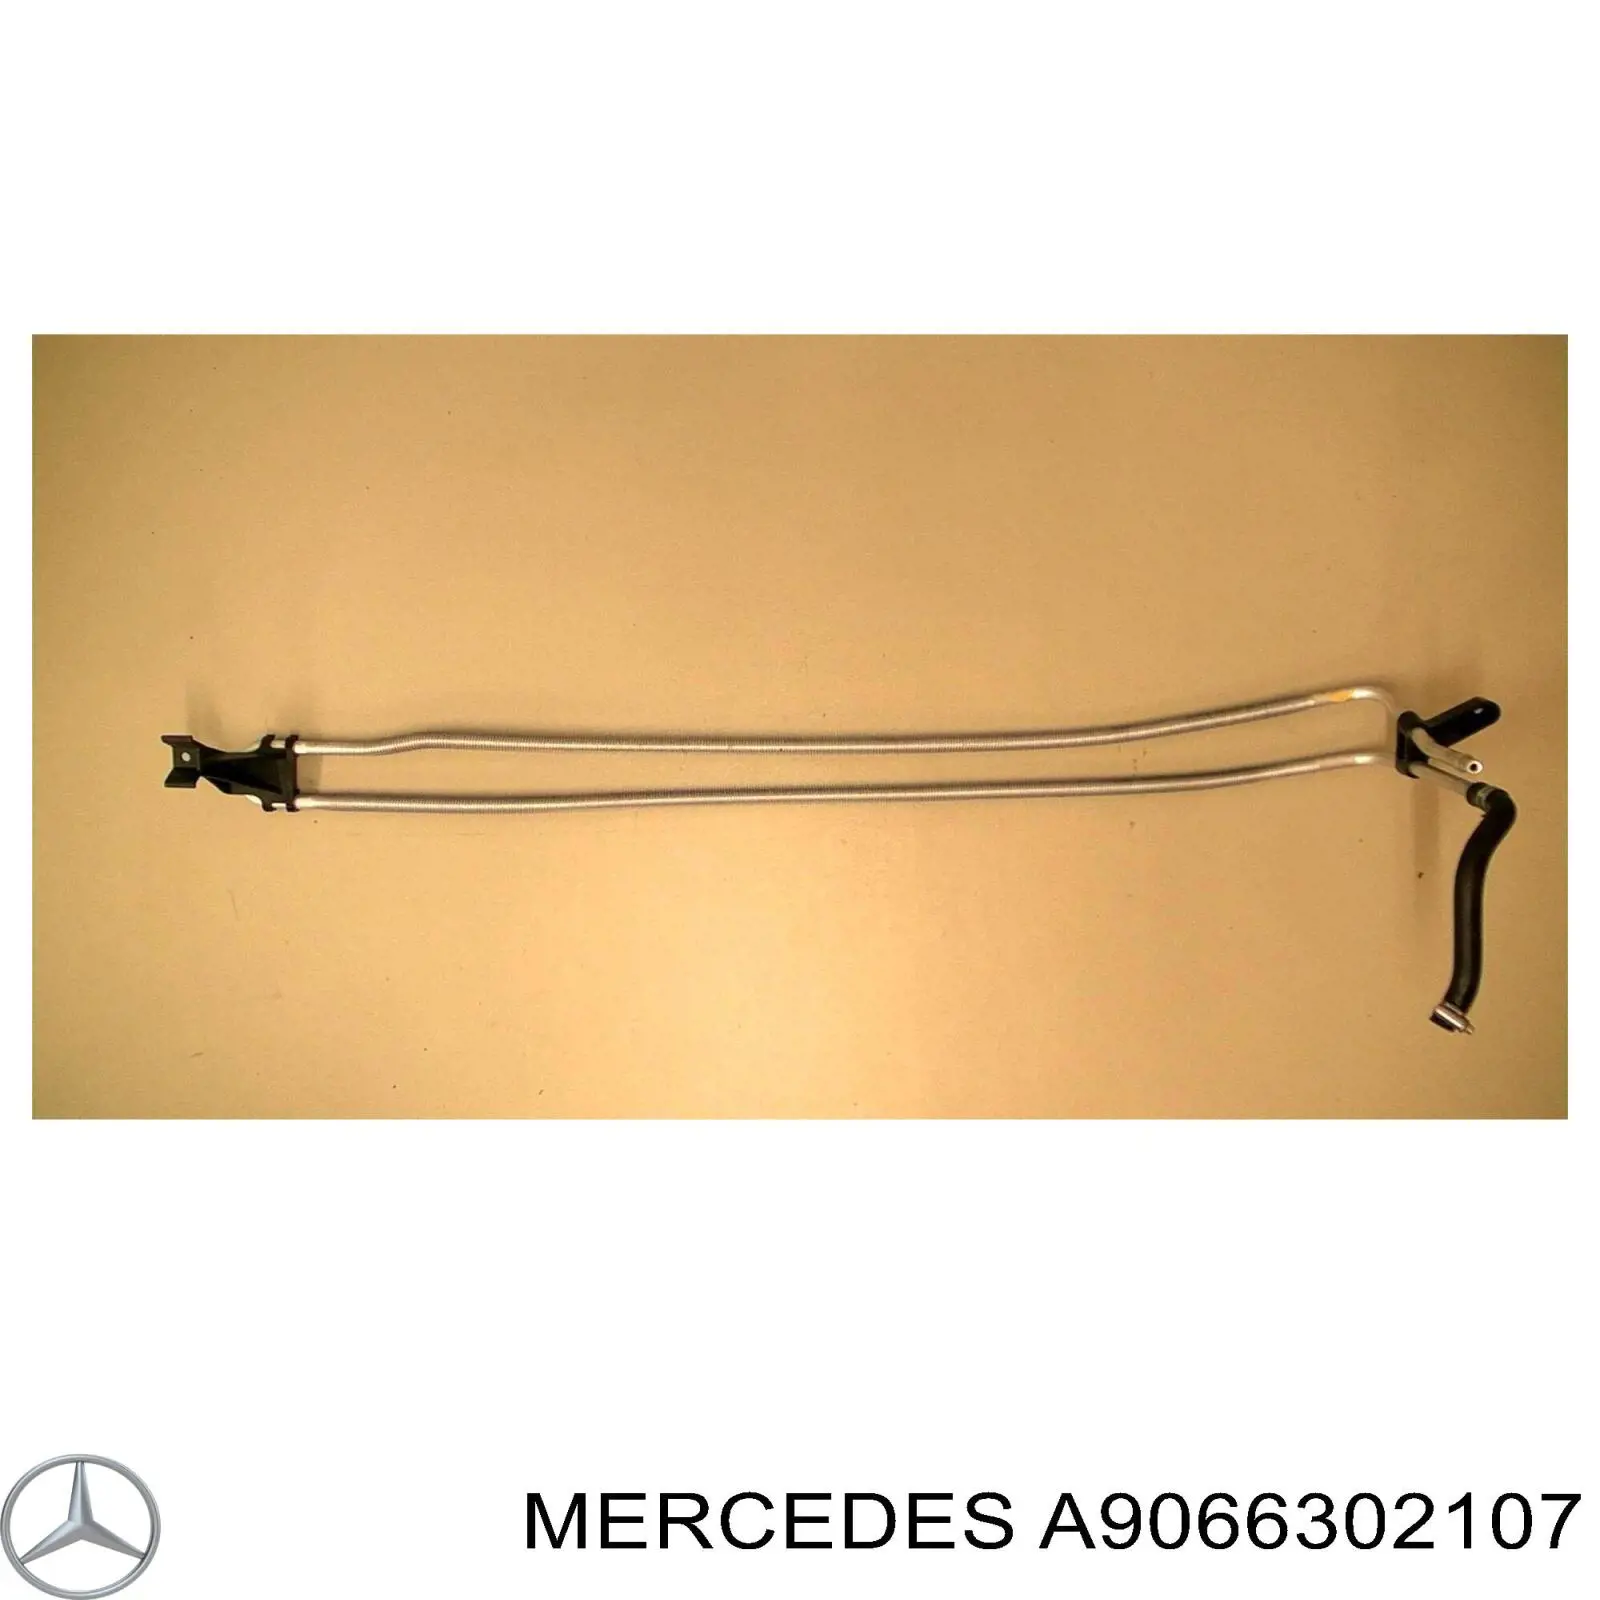 A9066302107 Mercedes arco de rueda, panel lateral, derecho